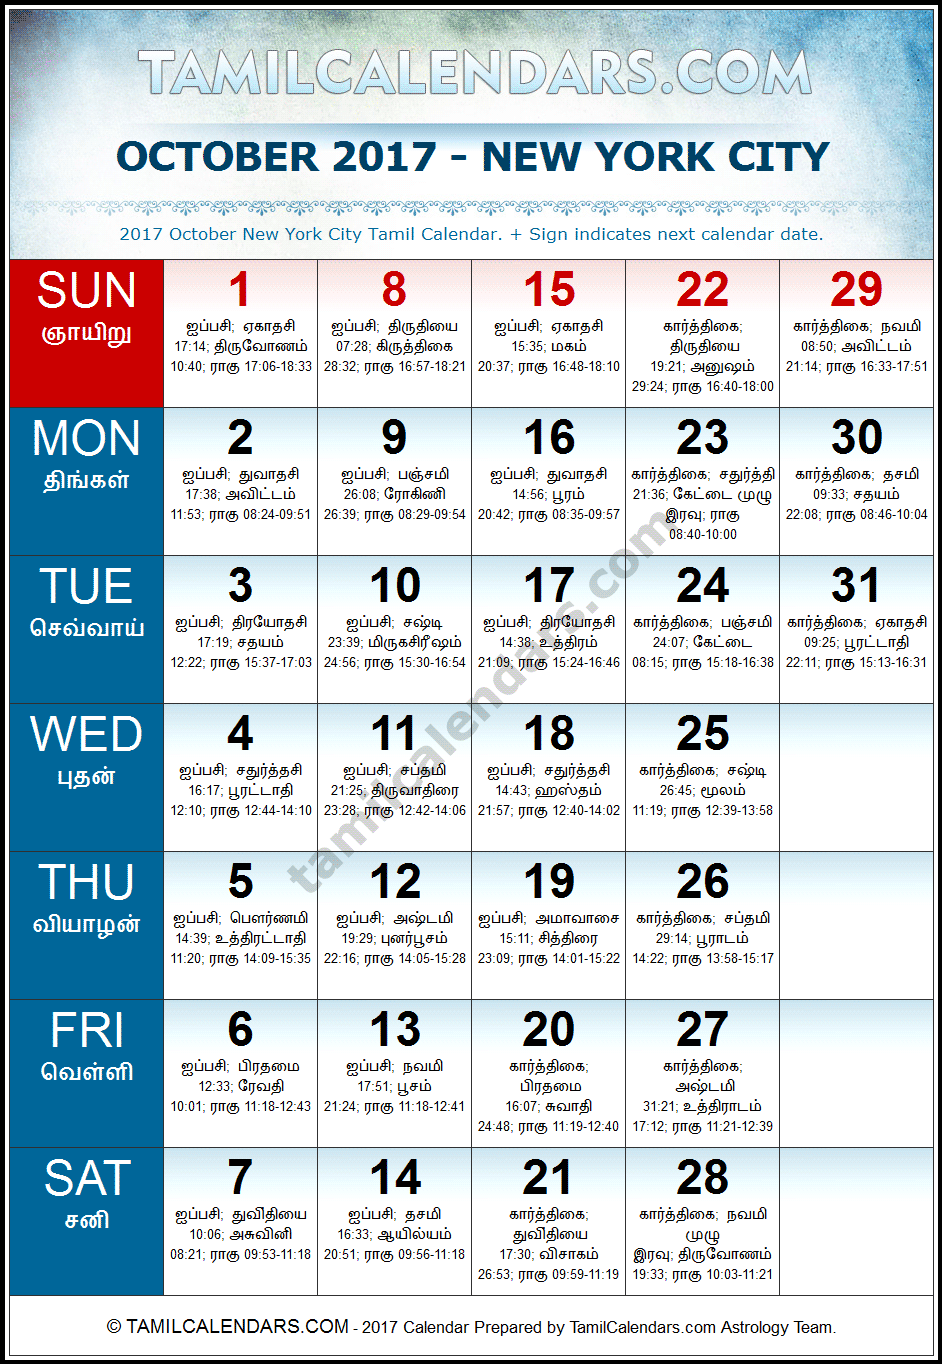 October 2017 Tamil Calendar for New York, USA